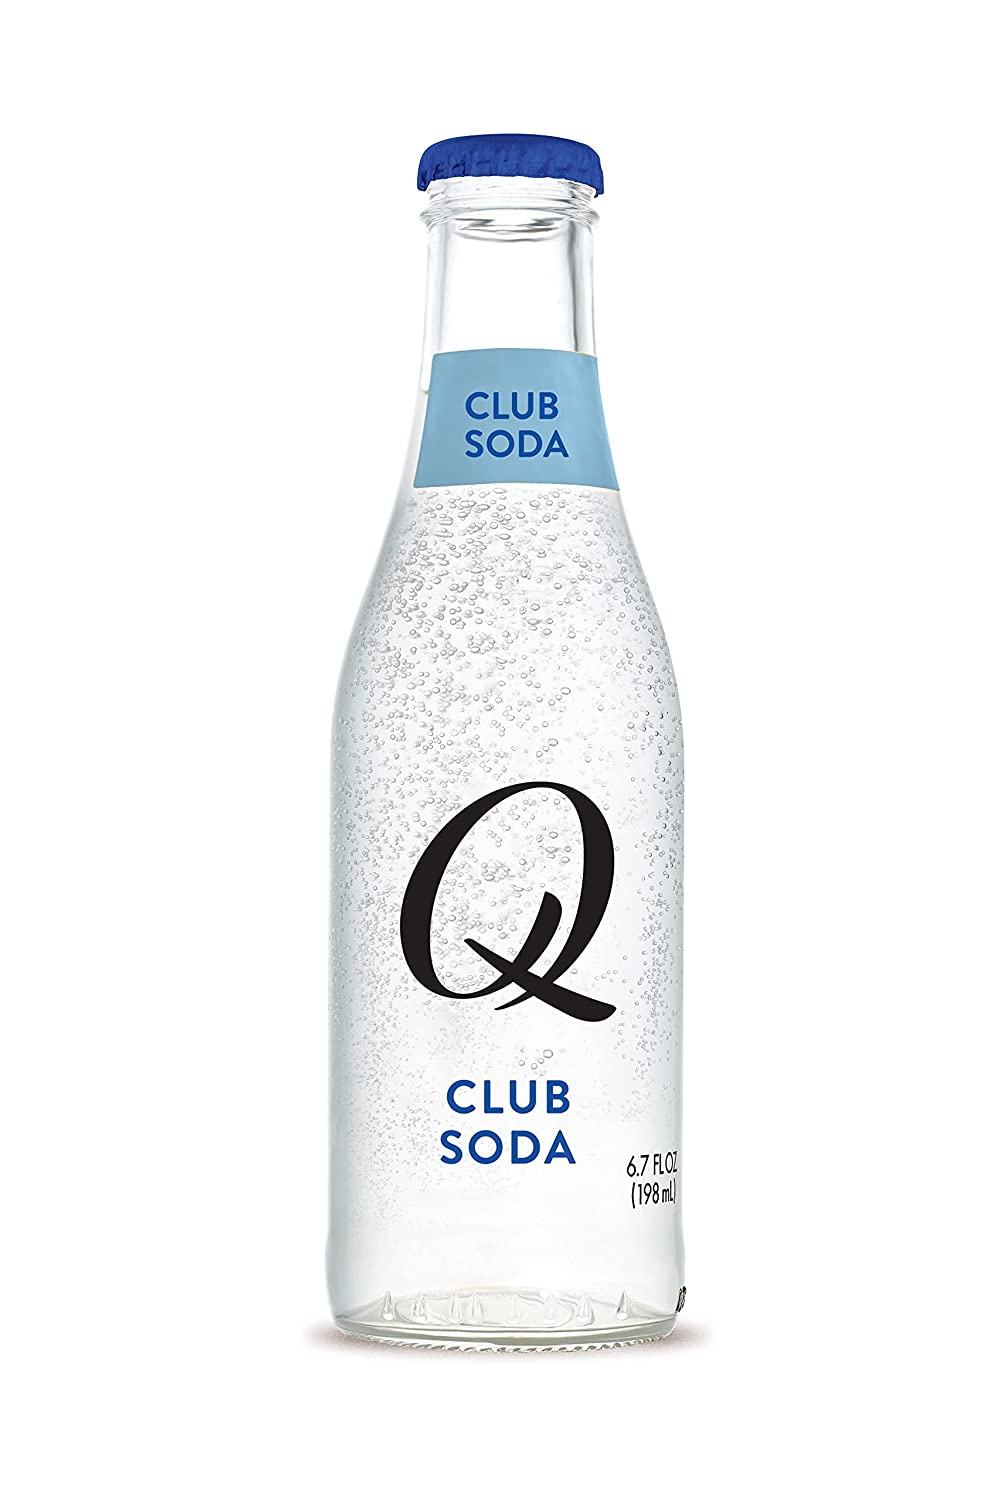 Q Mixers Club Soda, Premium Club Soda, 6.7 Fl Oz (Pack of 24)